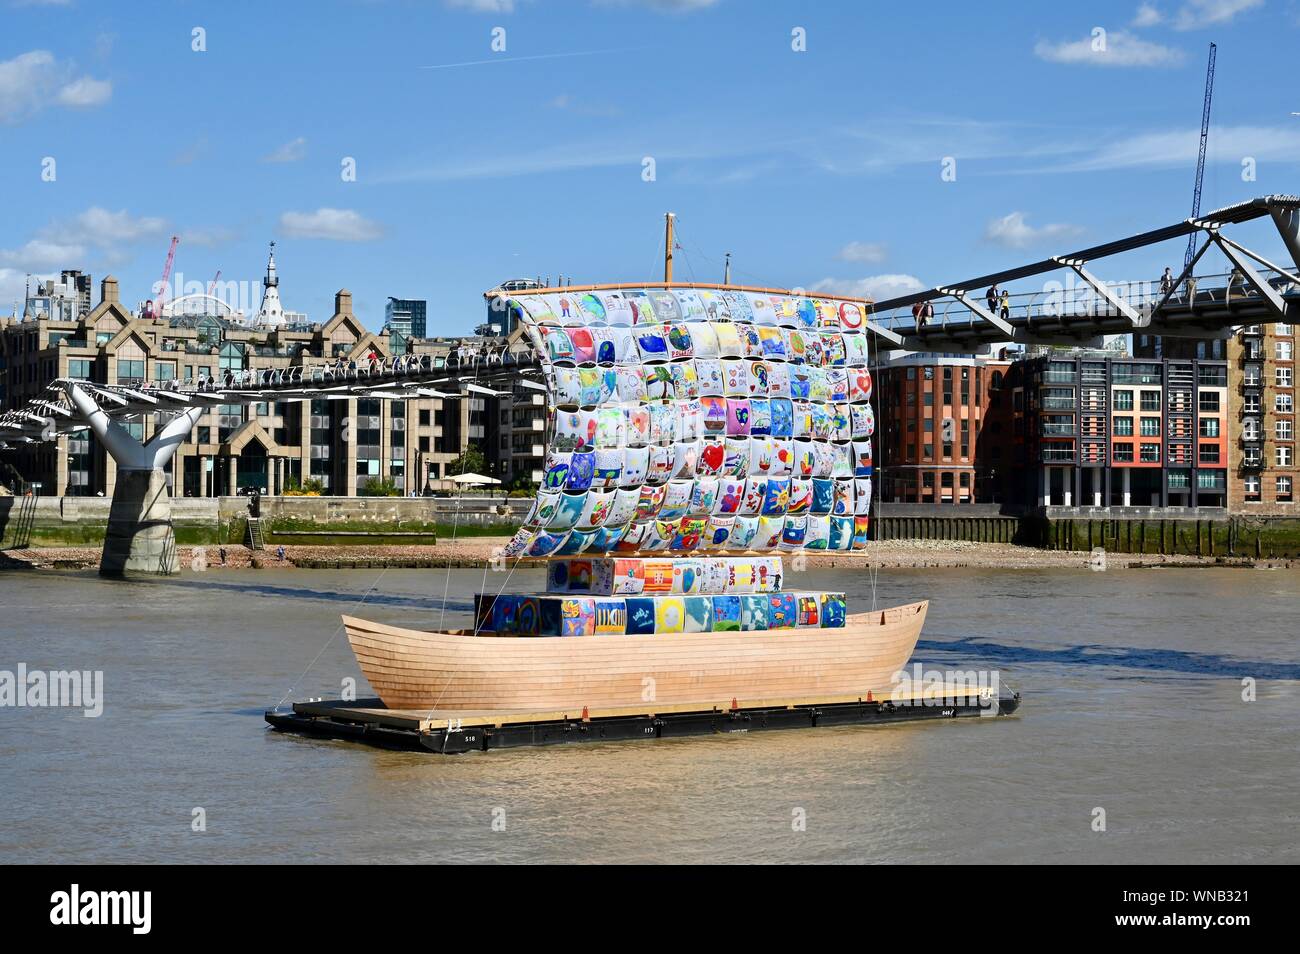 Ship of Tolerance by Ilya and Emily Kabakov, Totally Thames, Tate Modern, London. UK Stock Photo